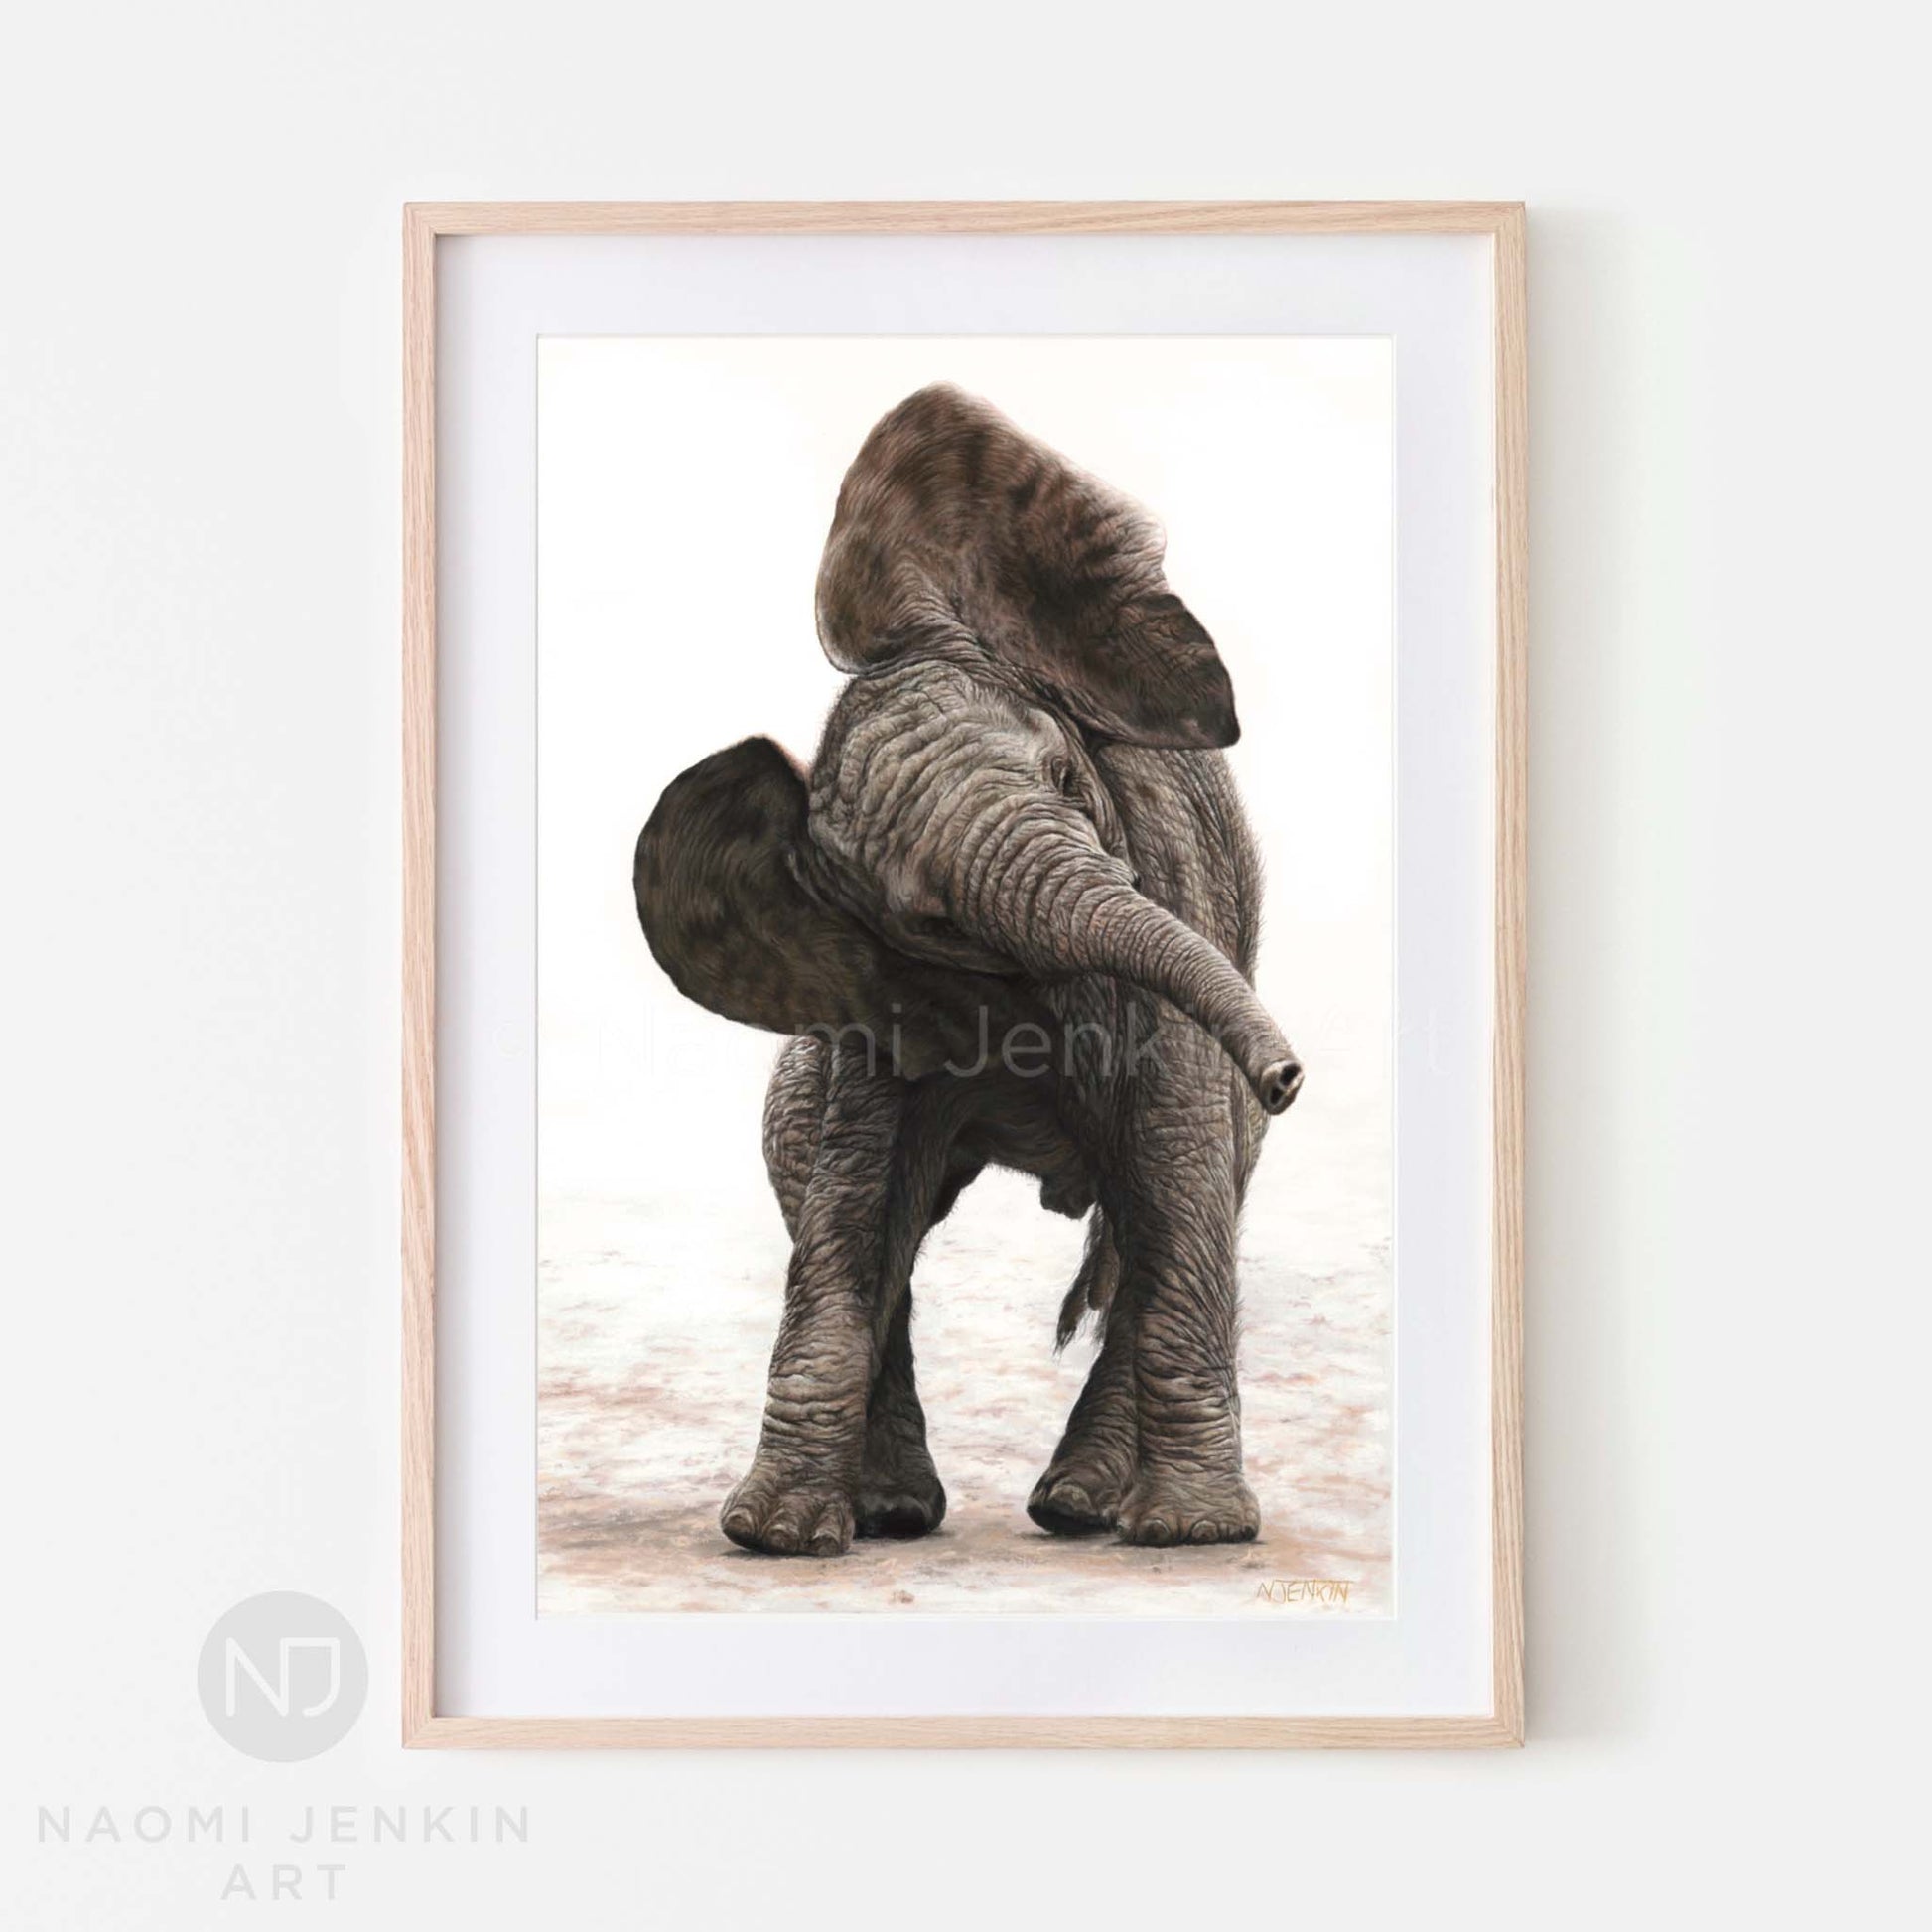 Framed elephant painting by wildlife artist Naomi Jenkin